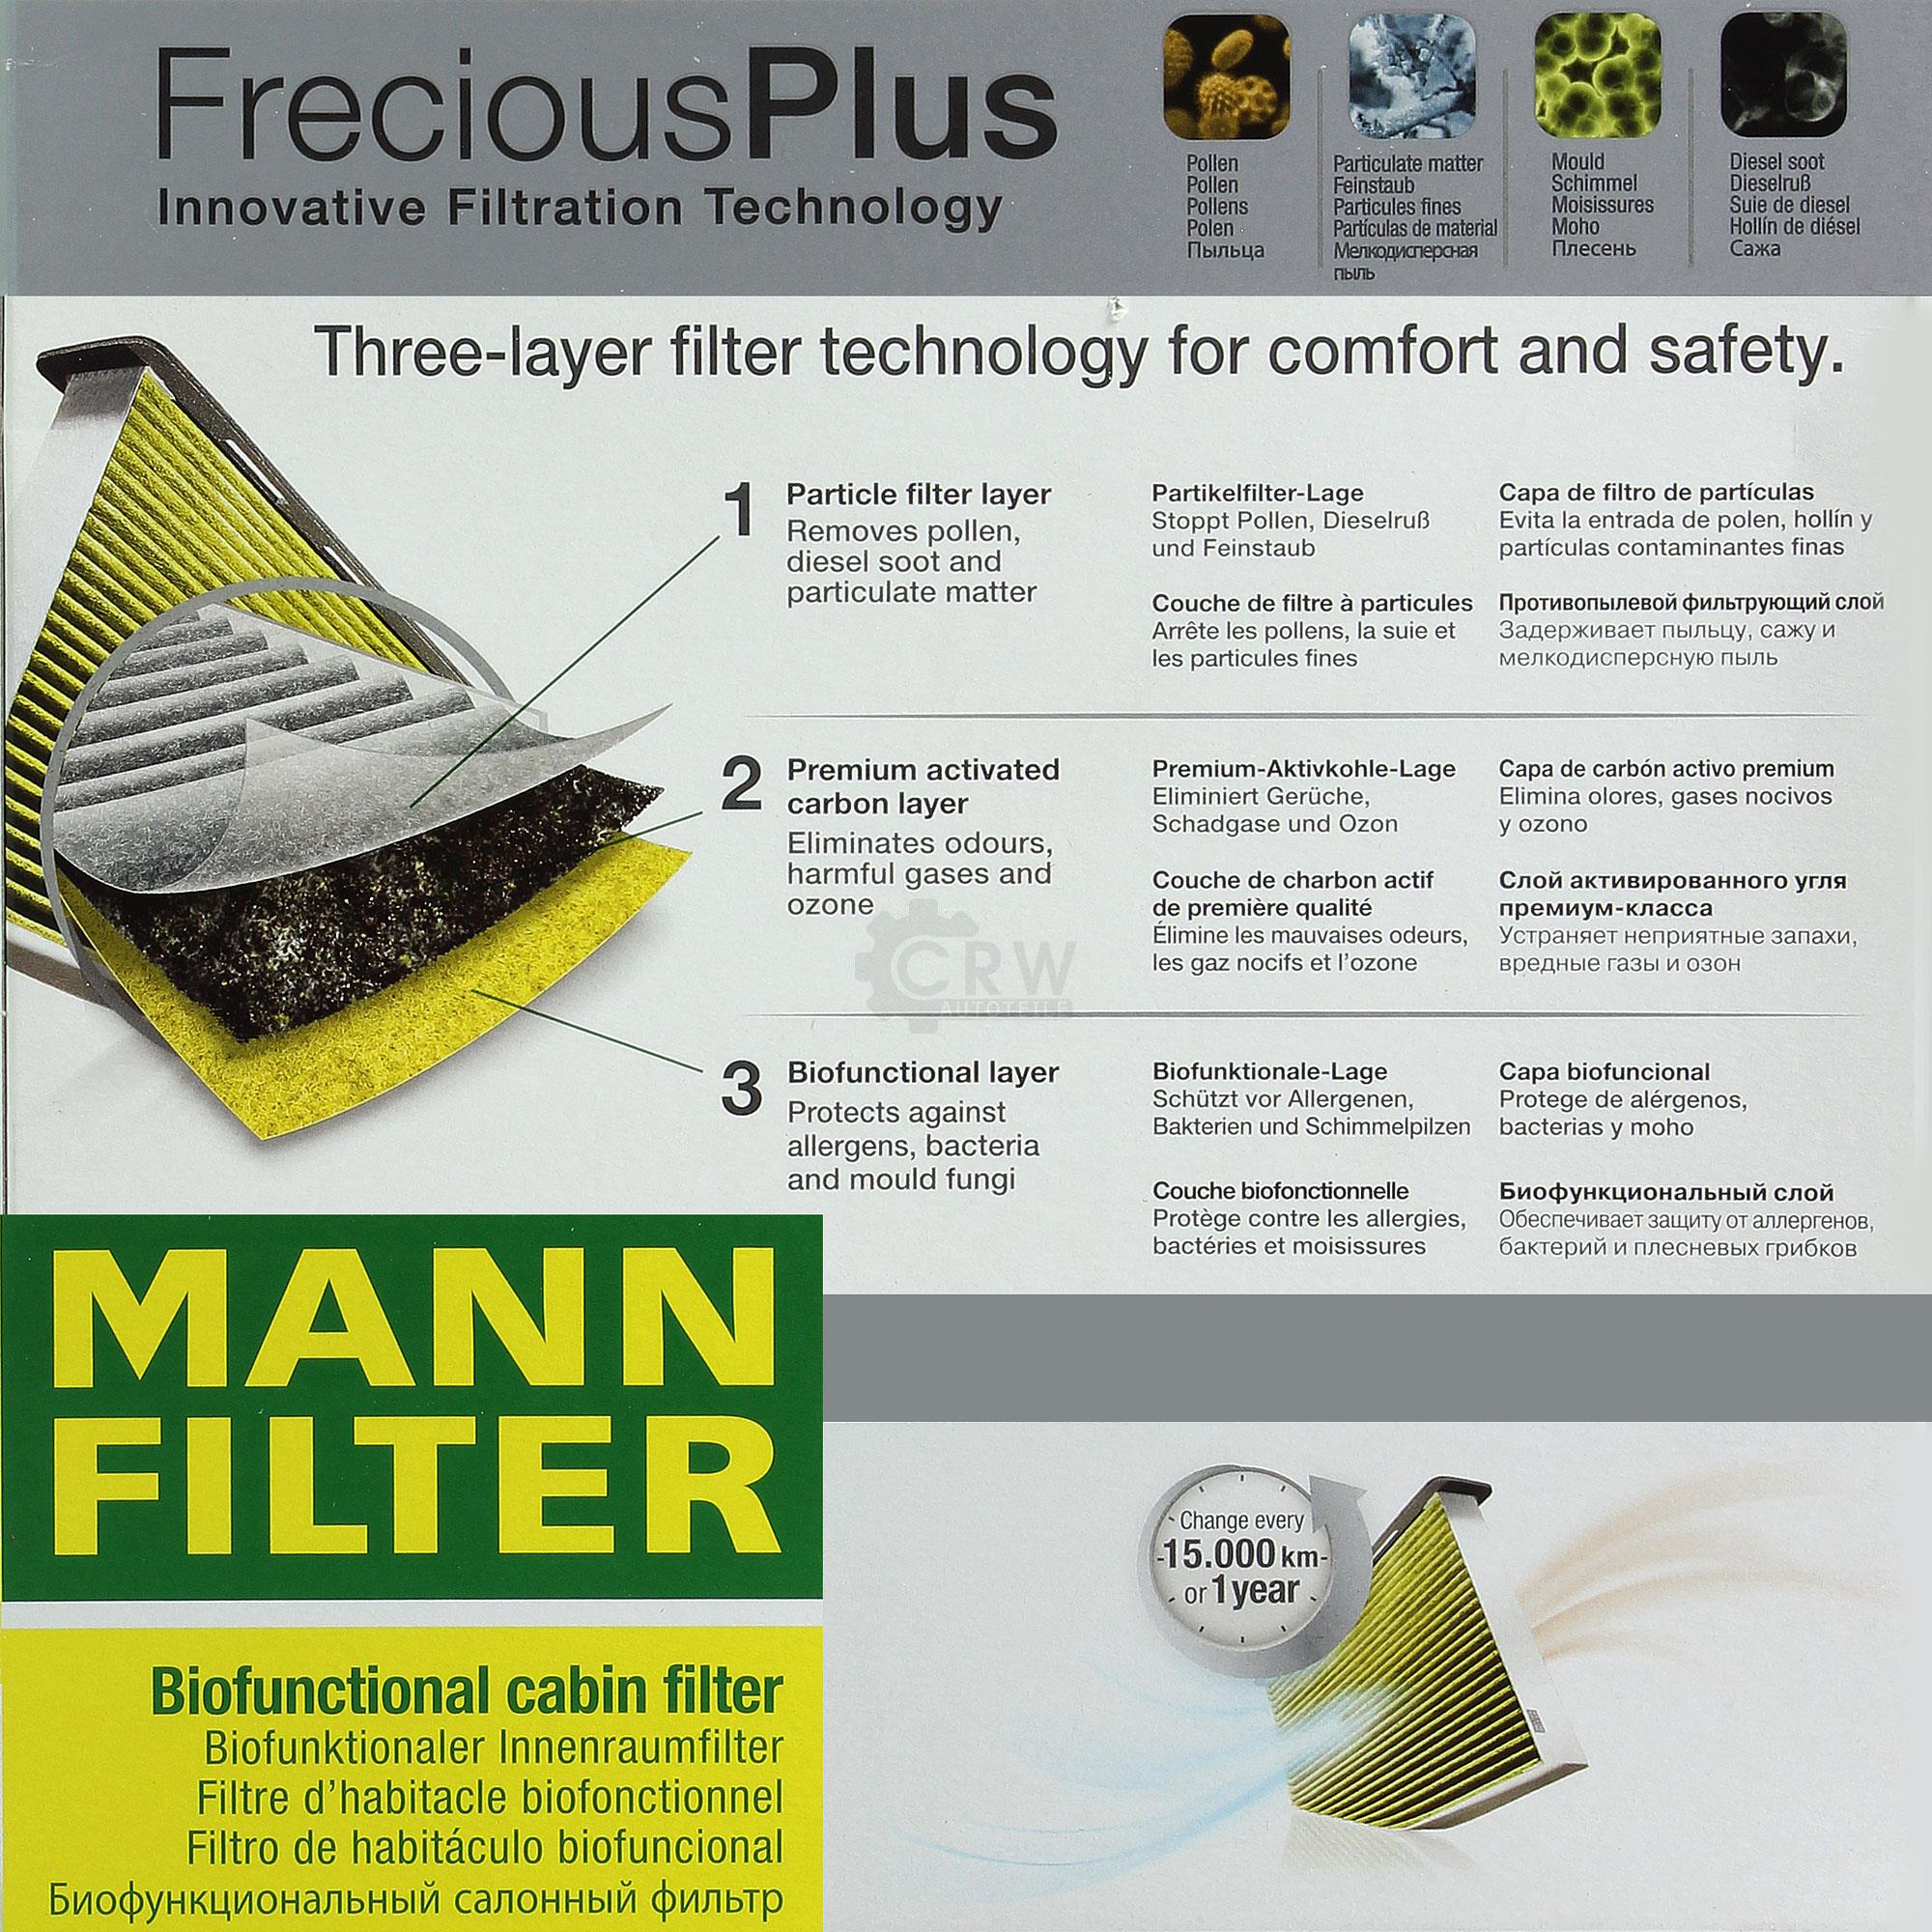 MANN-Filter Innenraumfilter Biofunctional für Allergiker FP 3054